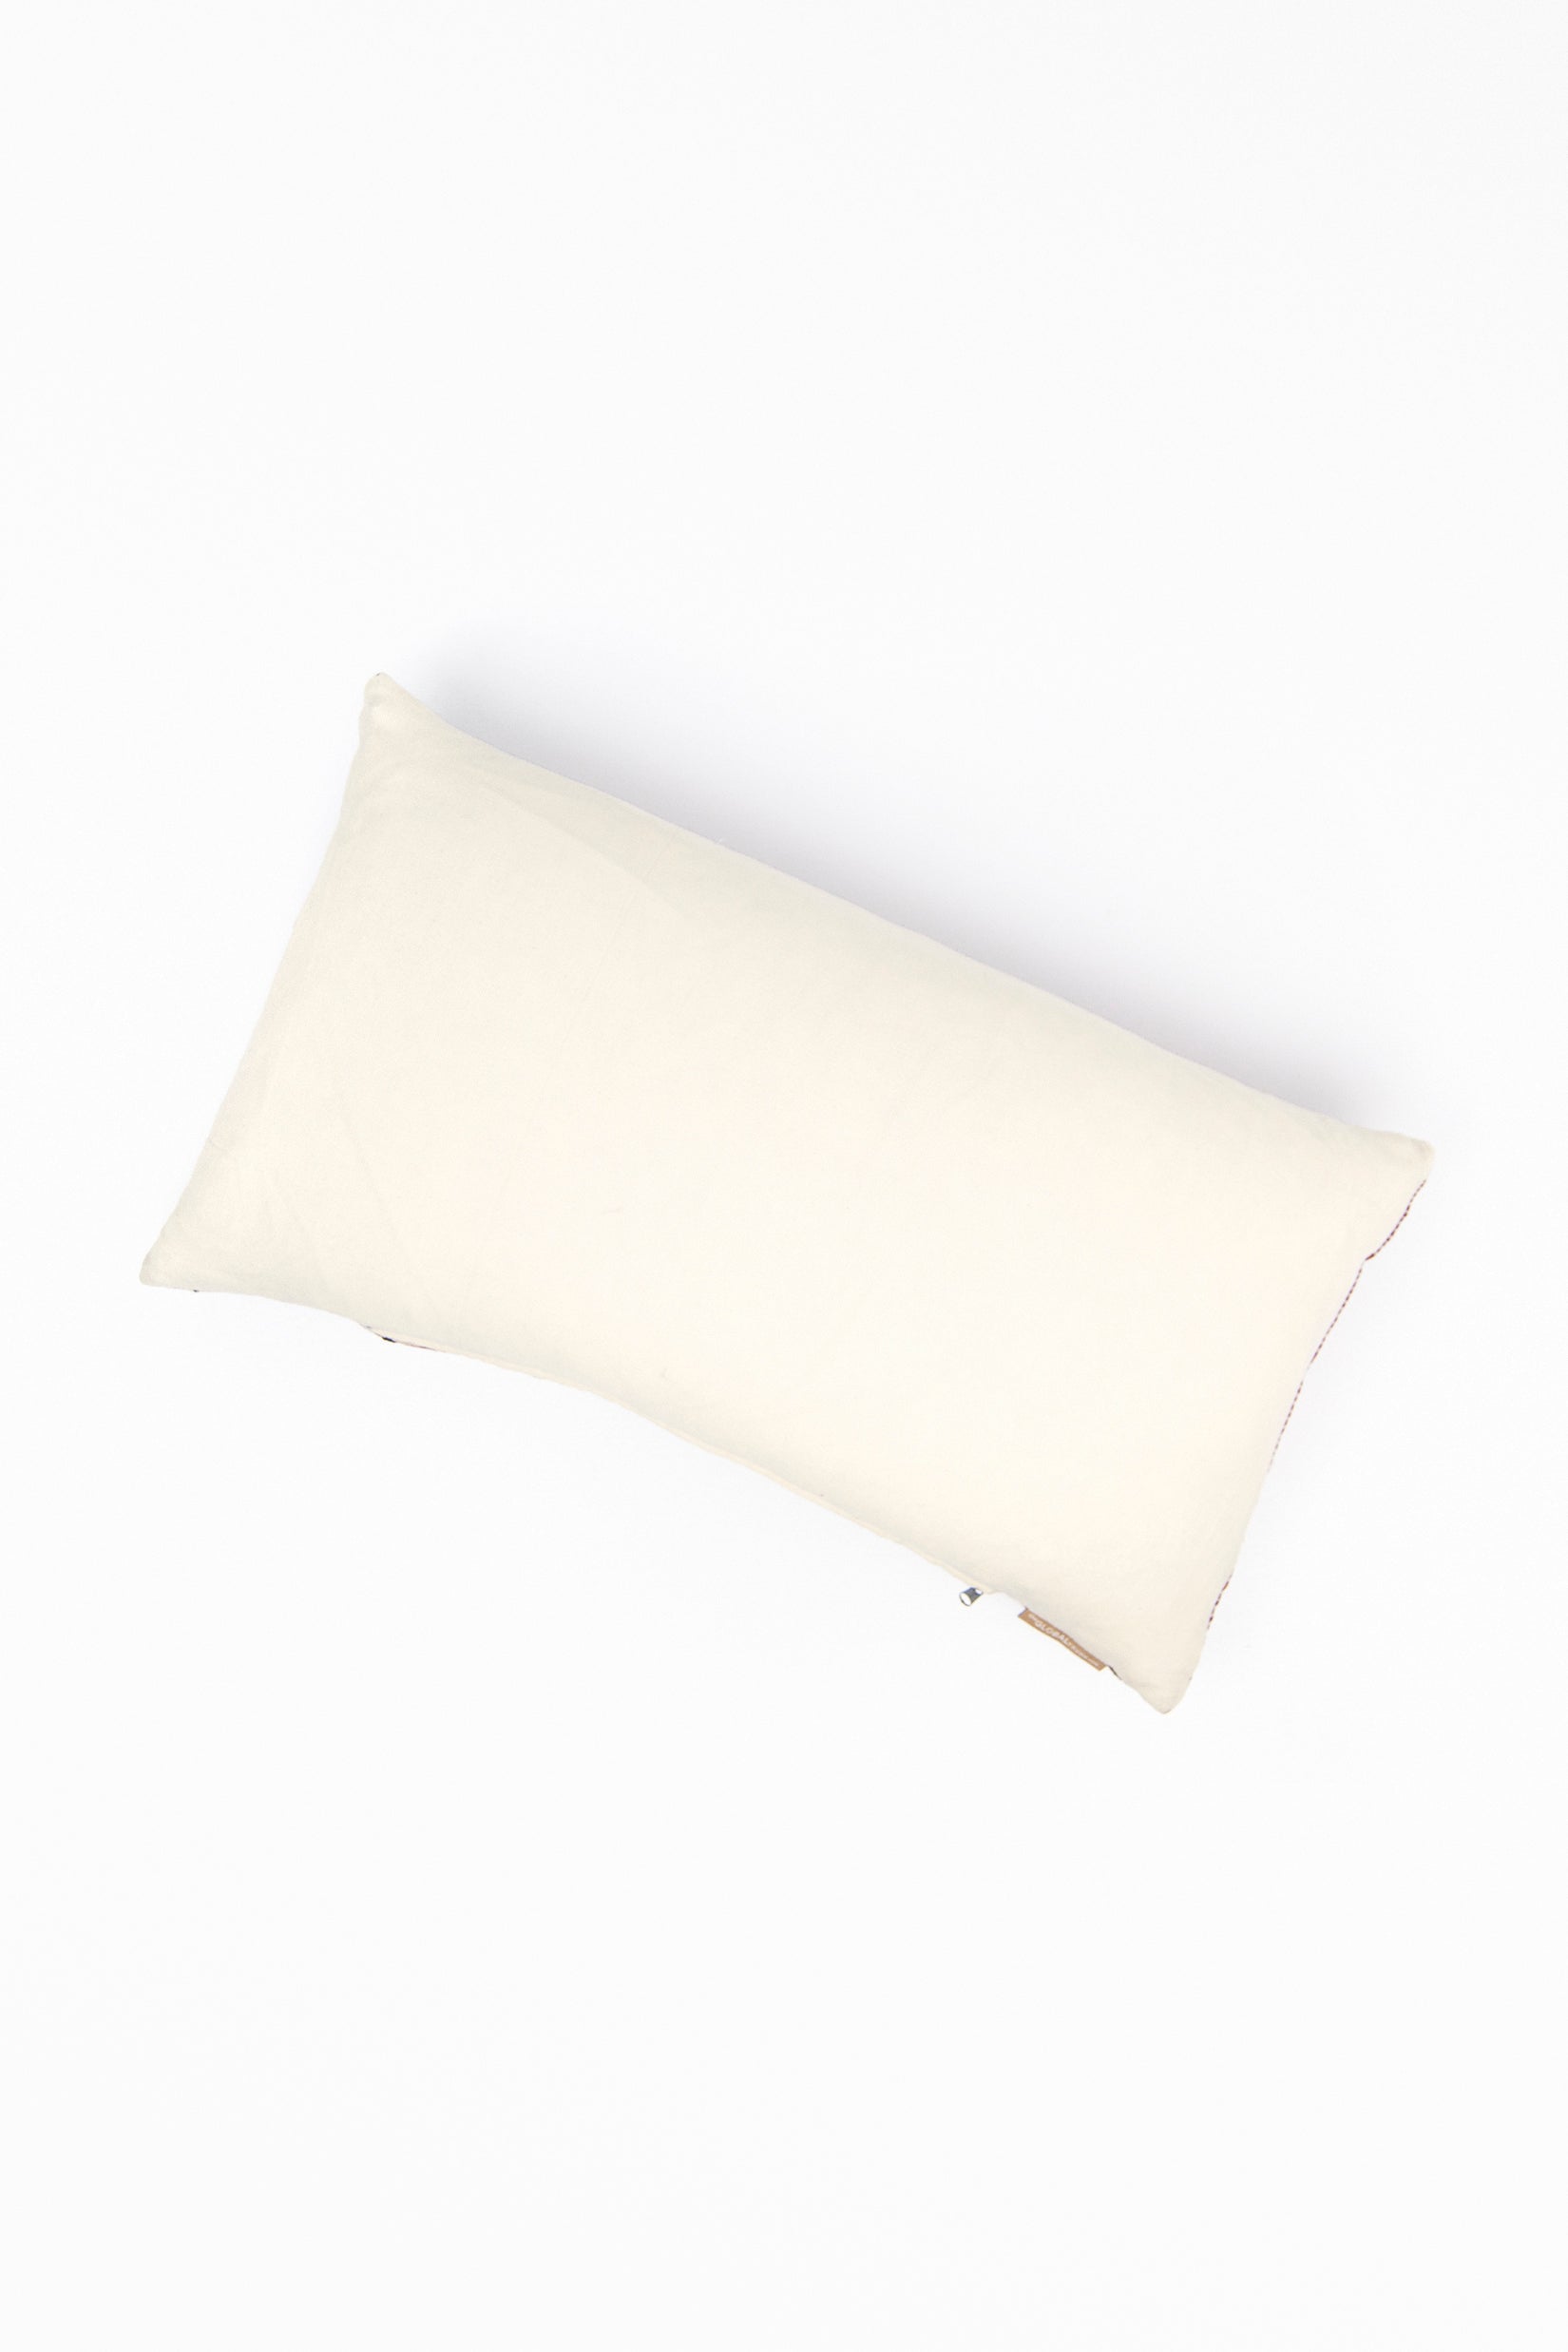 Maya Heirloom Pillow No. 214